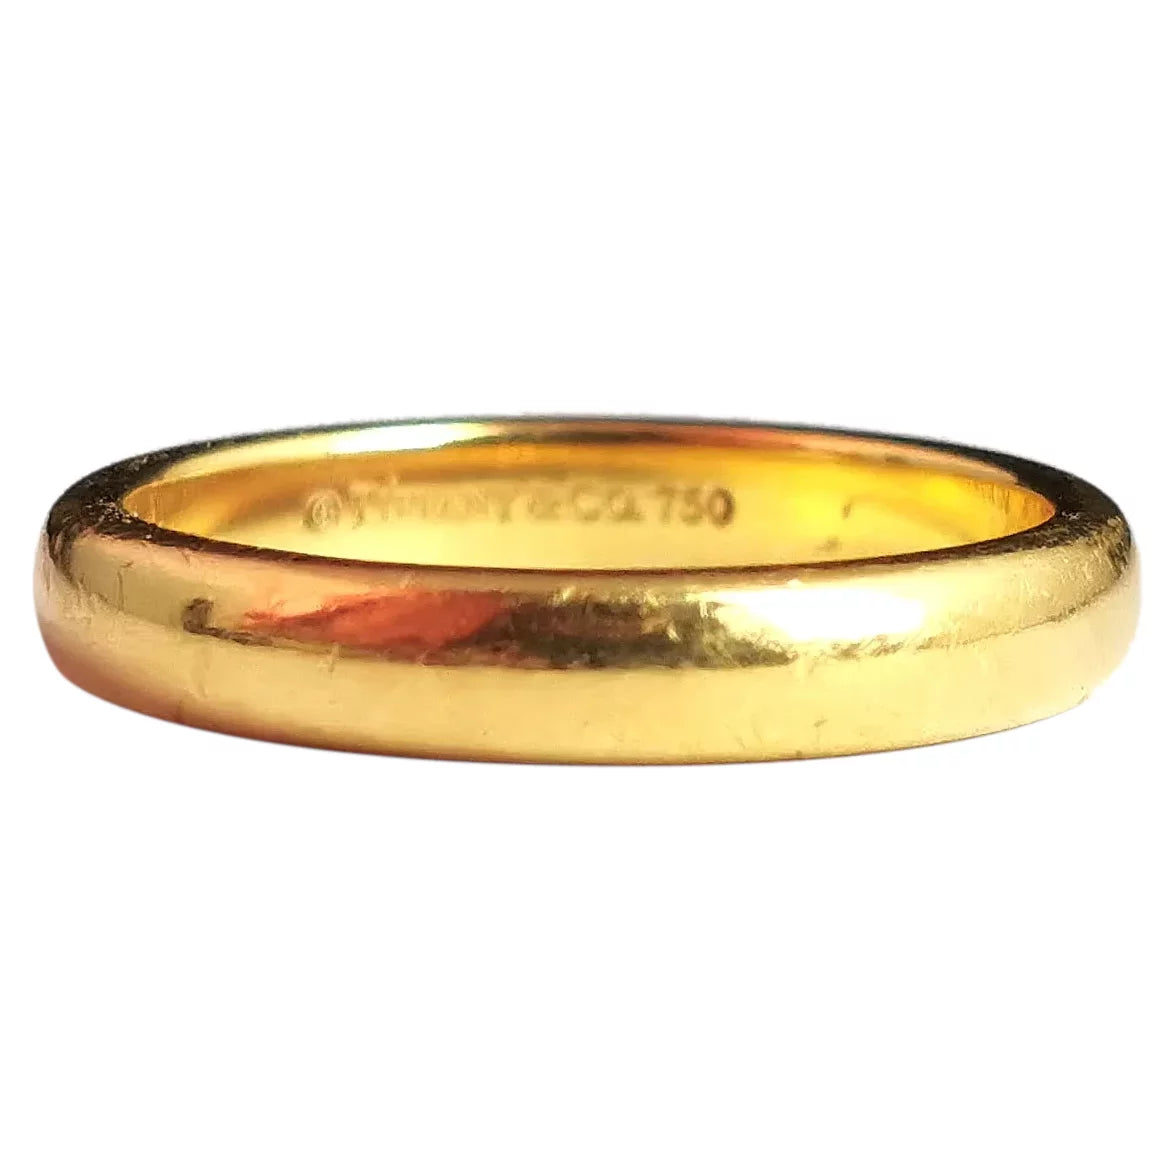 Vintage Tiffany 18ct yellow gold wedding band ring